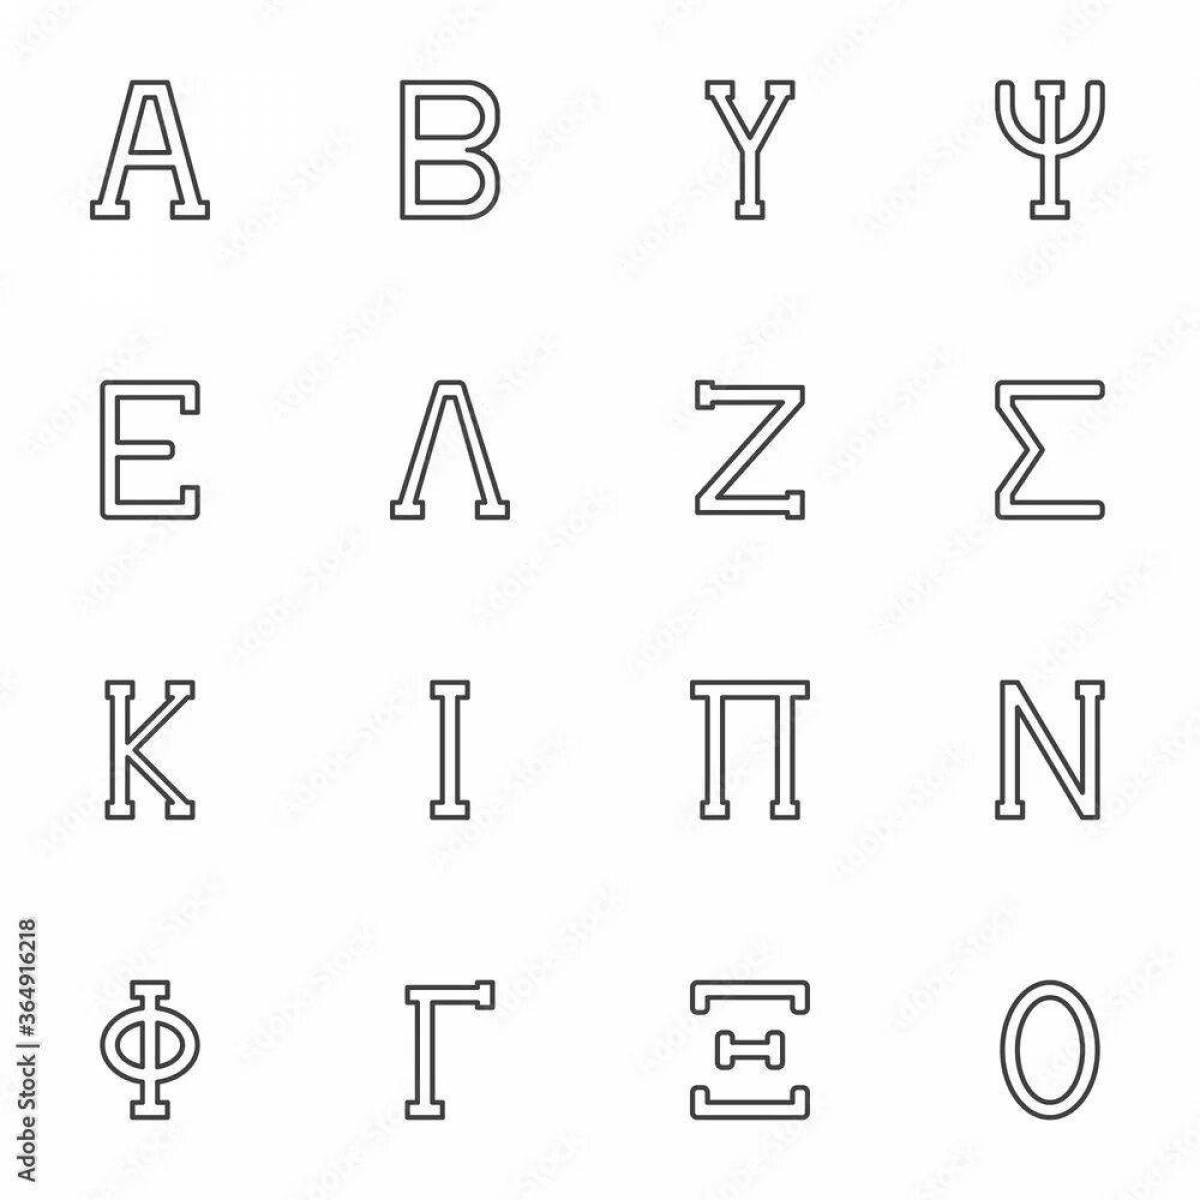 Attractive Greek alphabet coloring book design